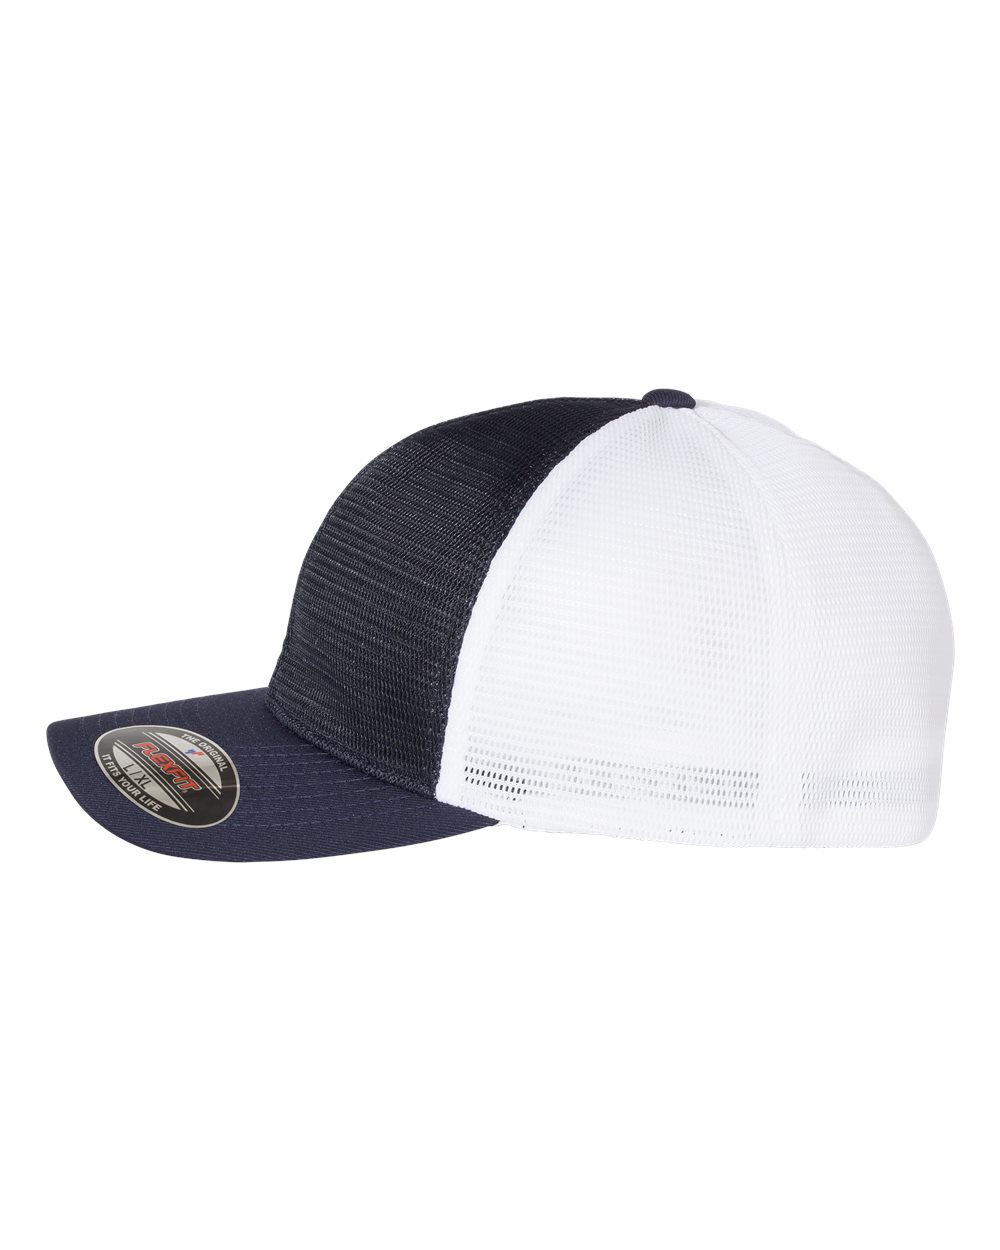 Navy/White Trucker Hat-Fitted